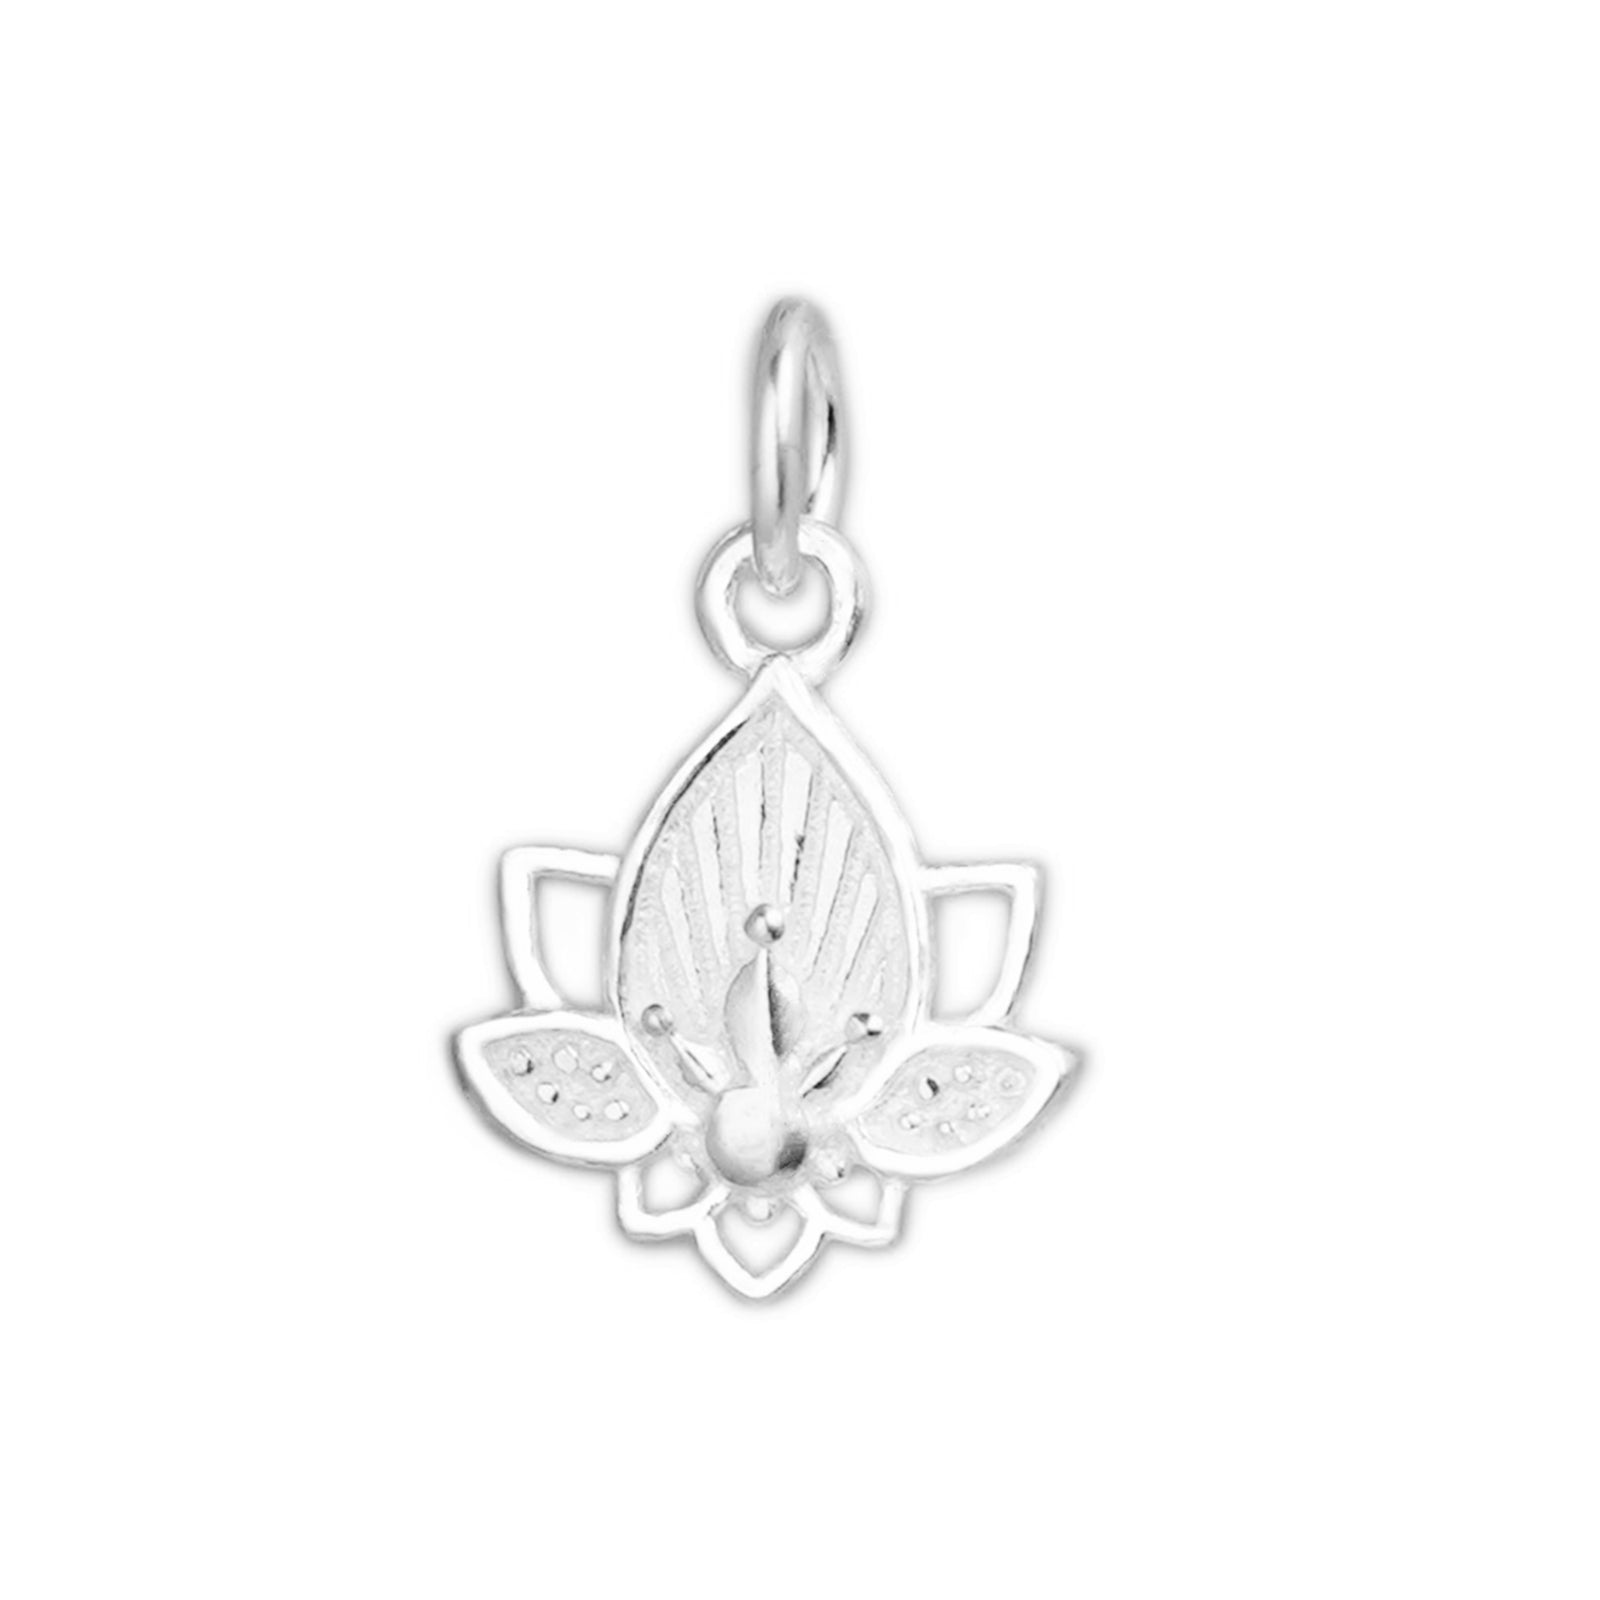 Sterling Silver Lotus Flower Yoga Zen Namaste Necklace Bracelet Pendant Charm - sugarkittenlondon